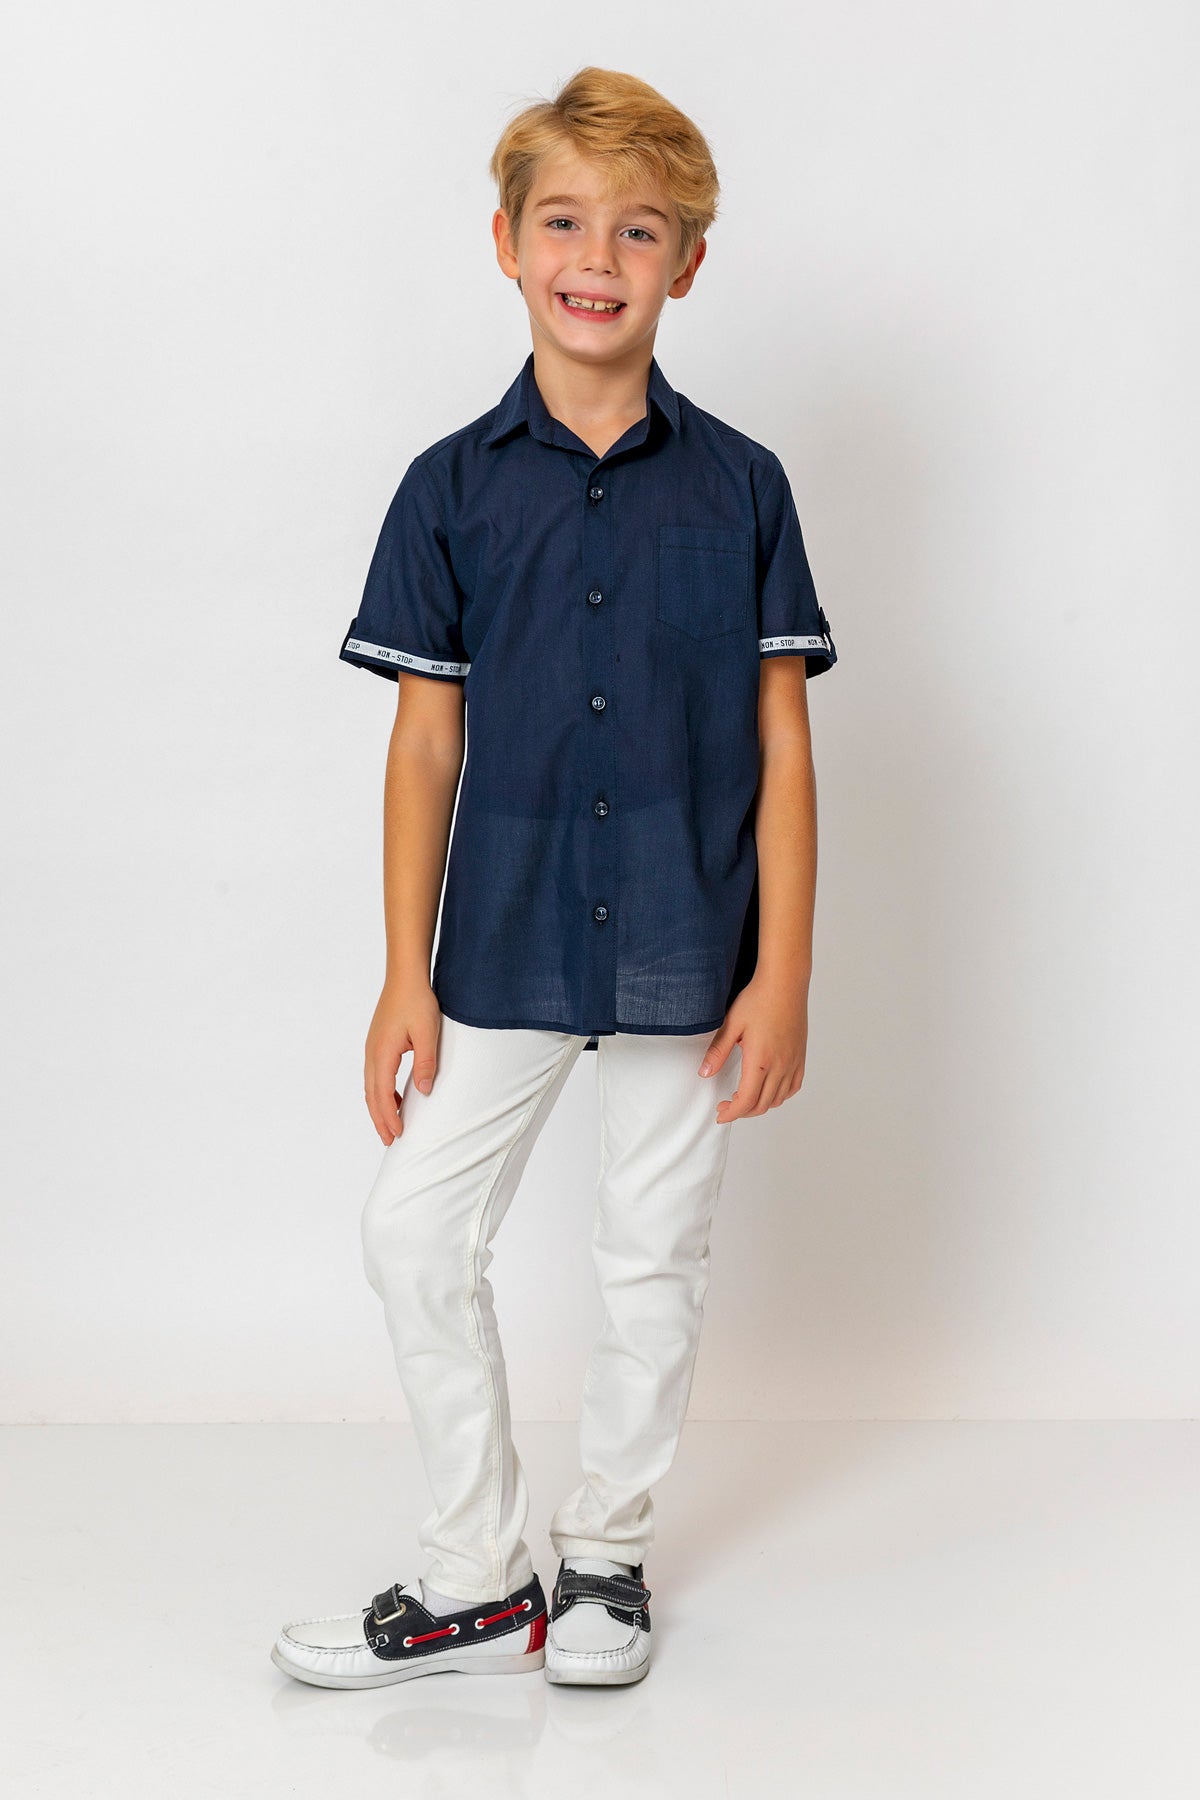 InCity Kids Boys Collared Short Sleeve Solid Pocket Button-Down Shirt InCity Boys & Girls